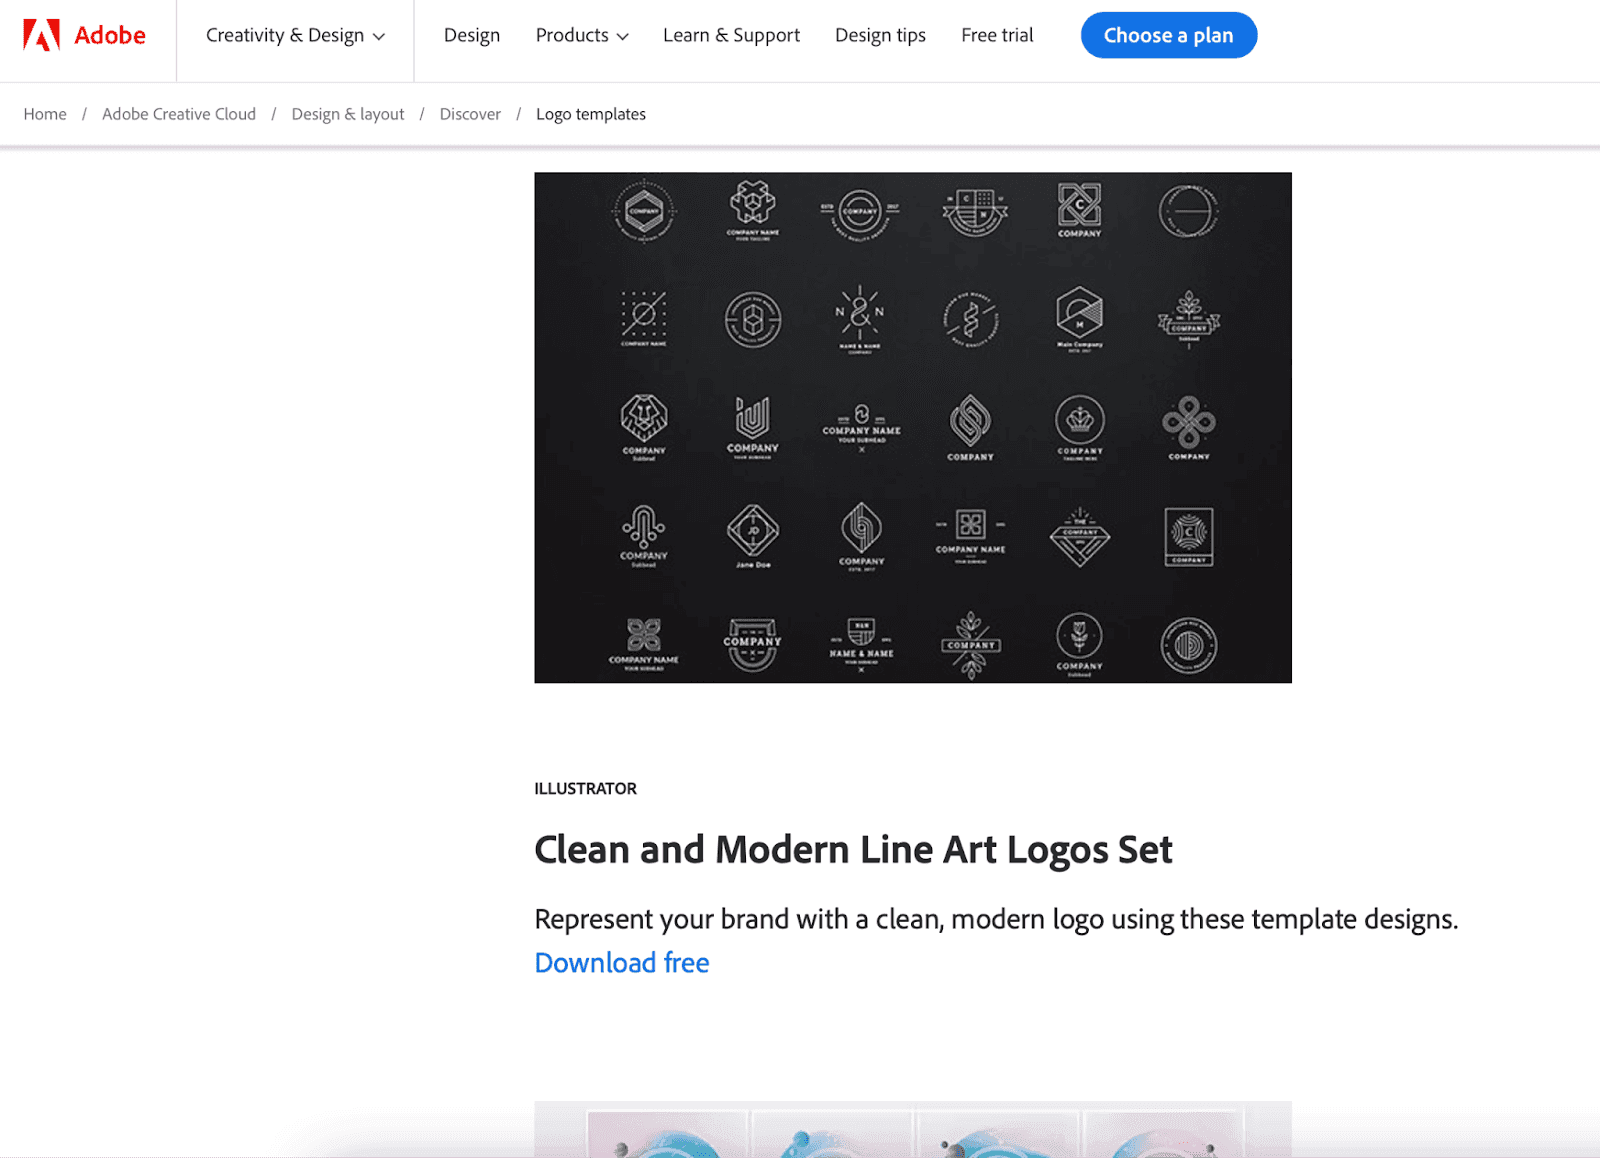 Adobe Illustrator modern line logo templates